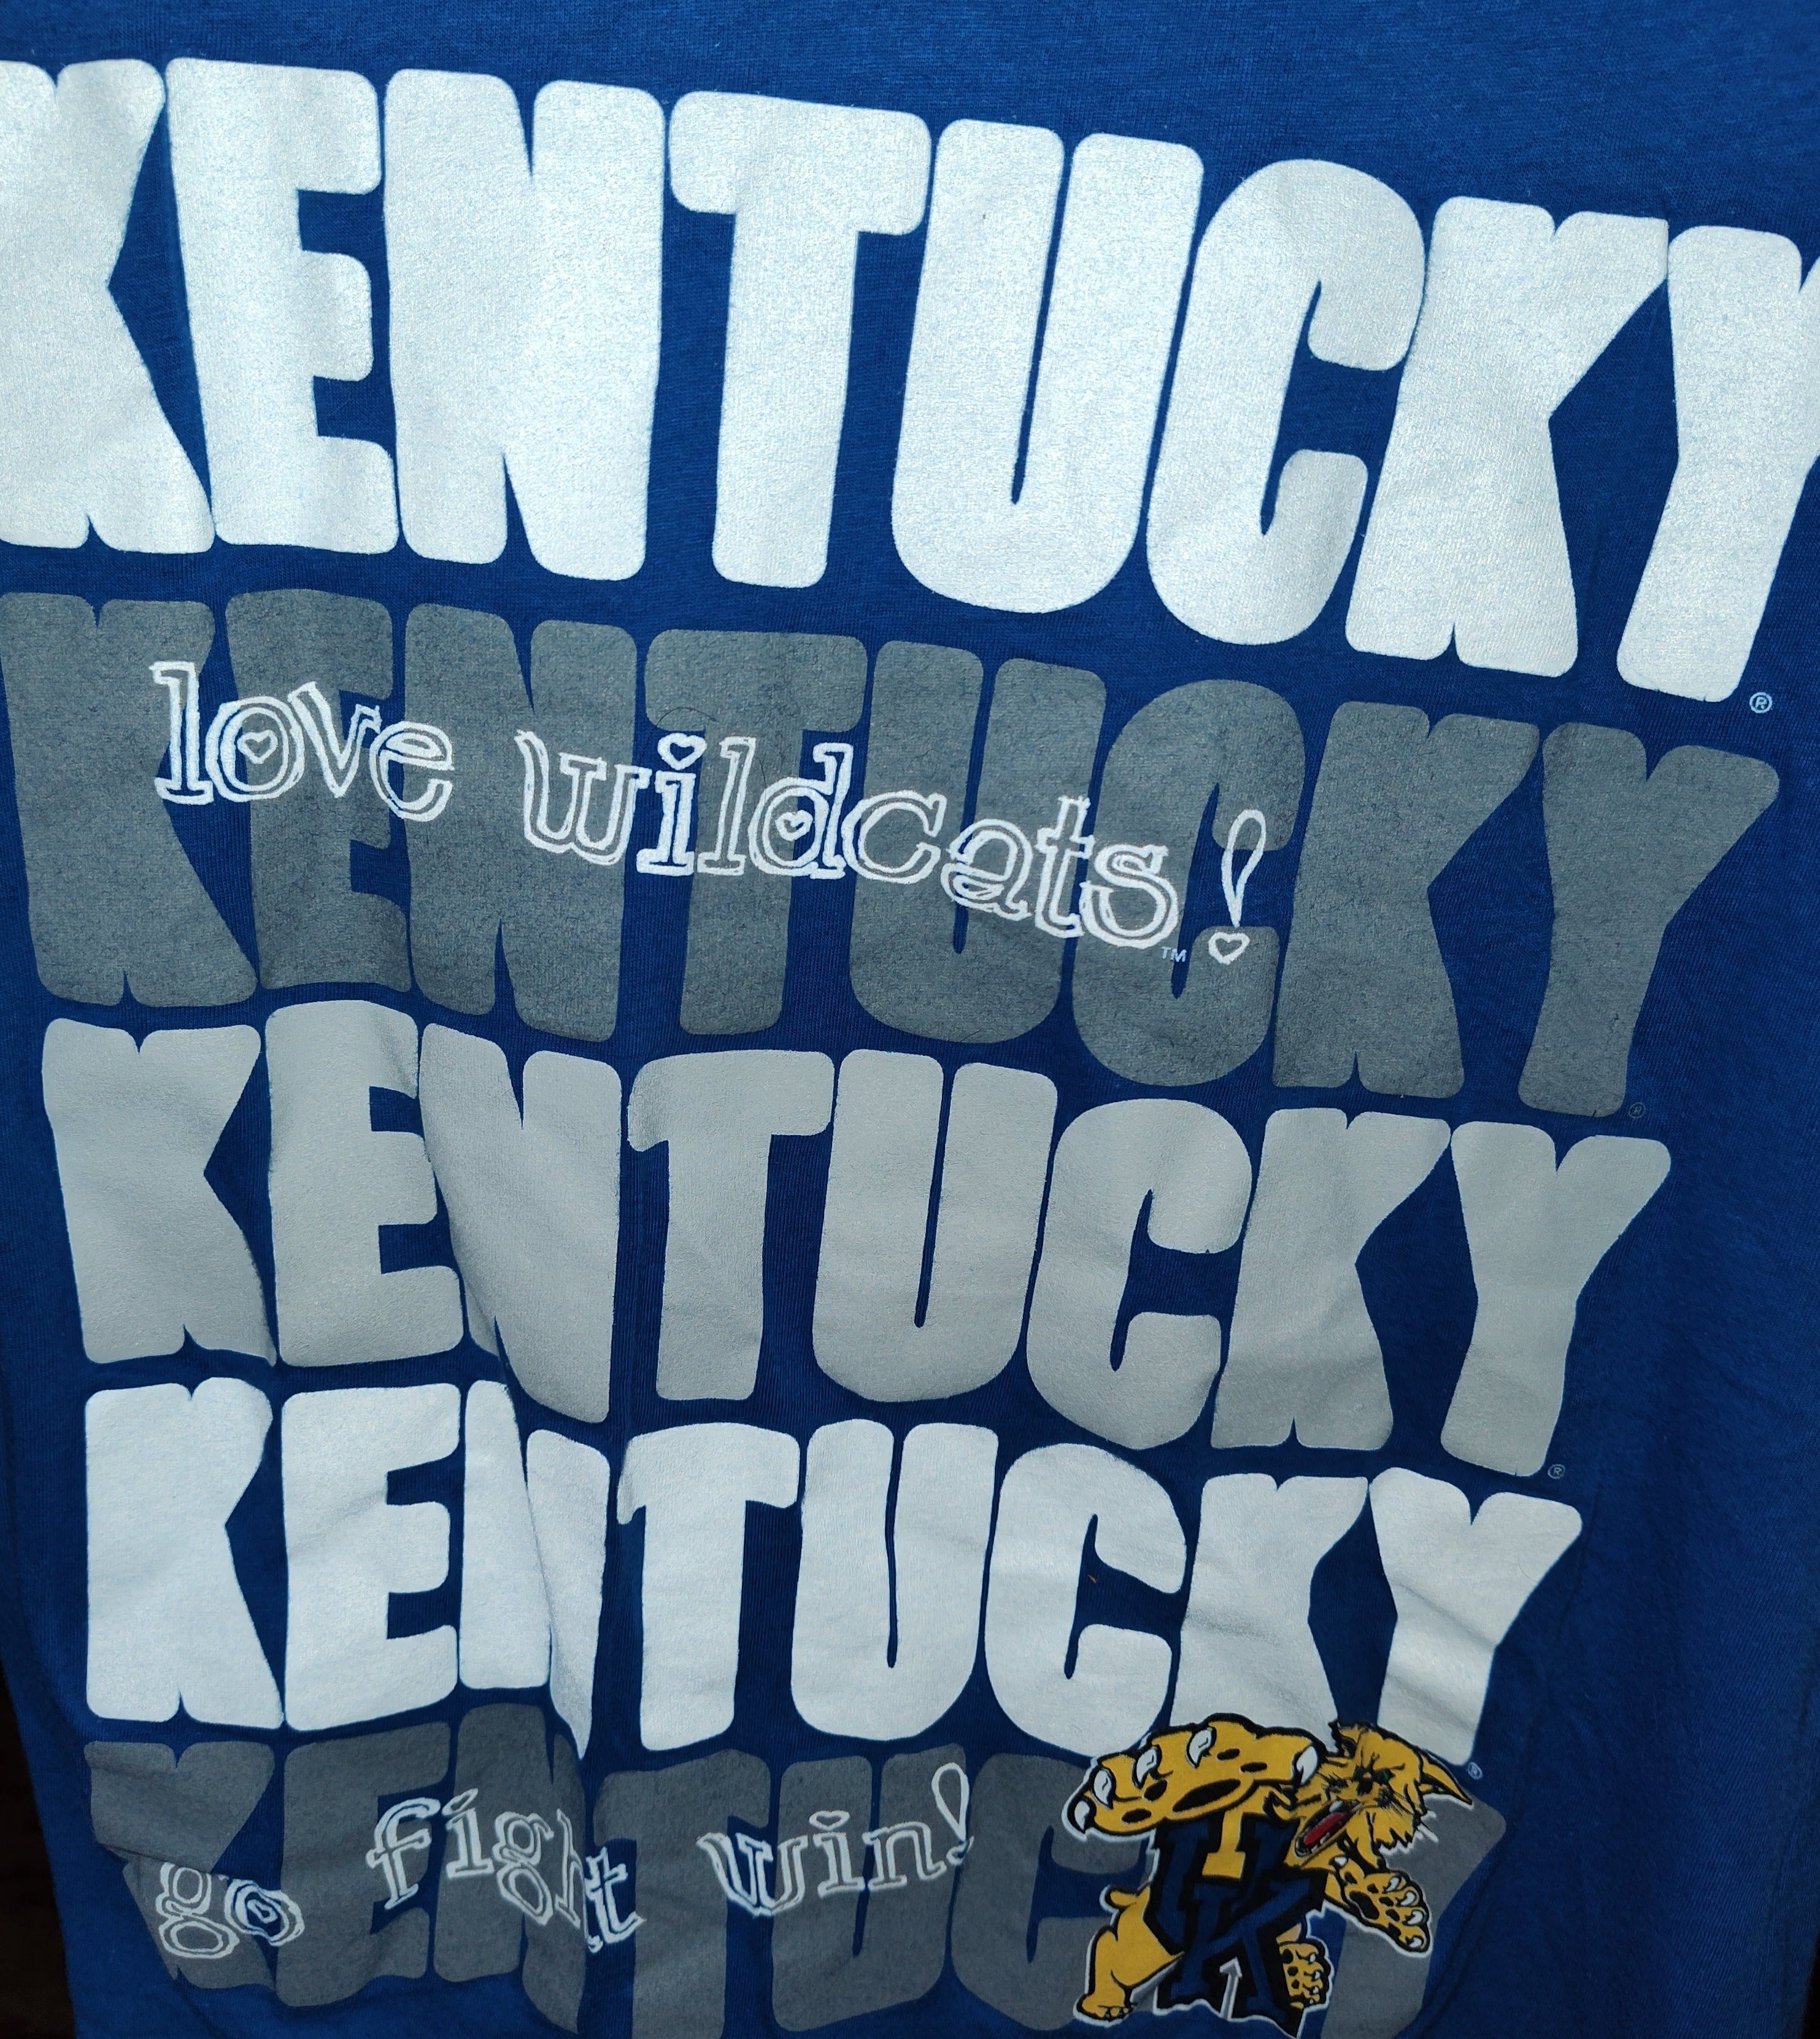 Women's Blue V-neck Kentucky Wildcat Shirt by Soffe - preowned